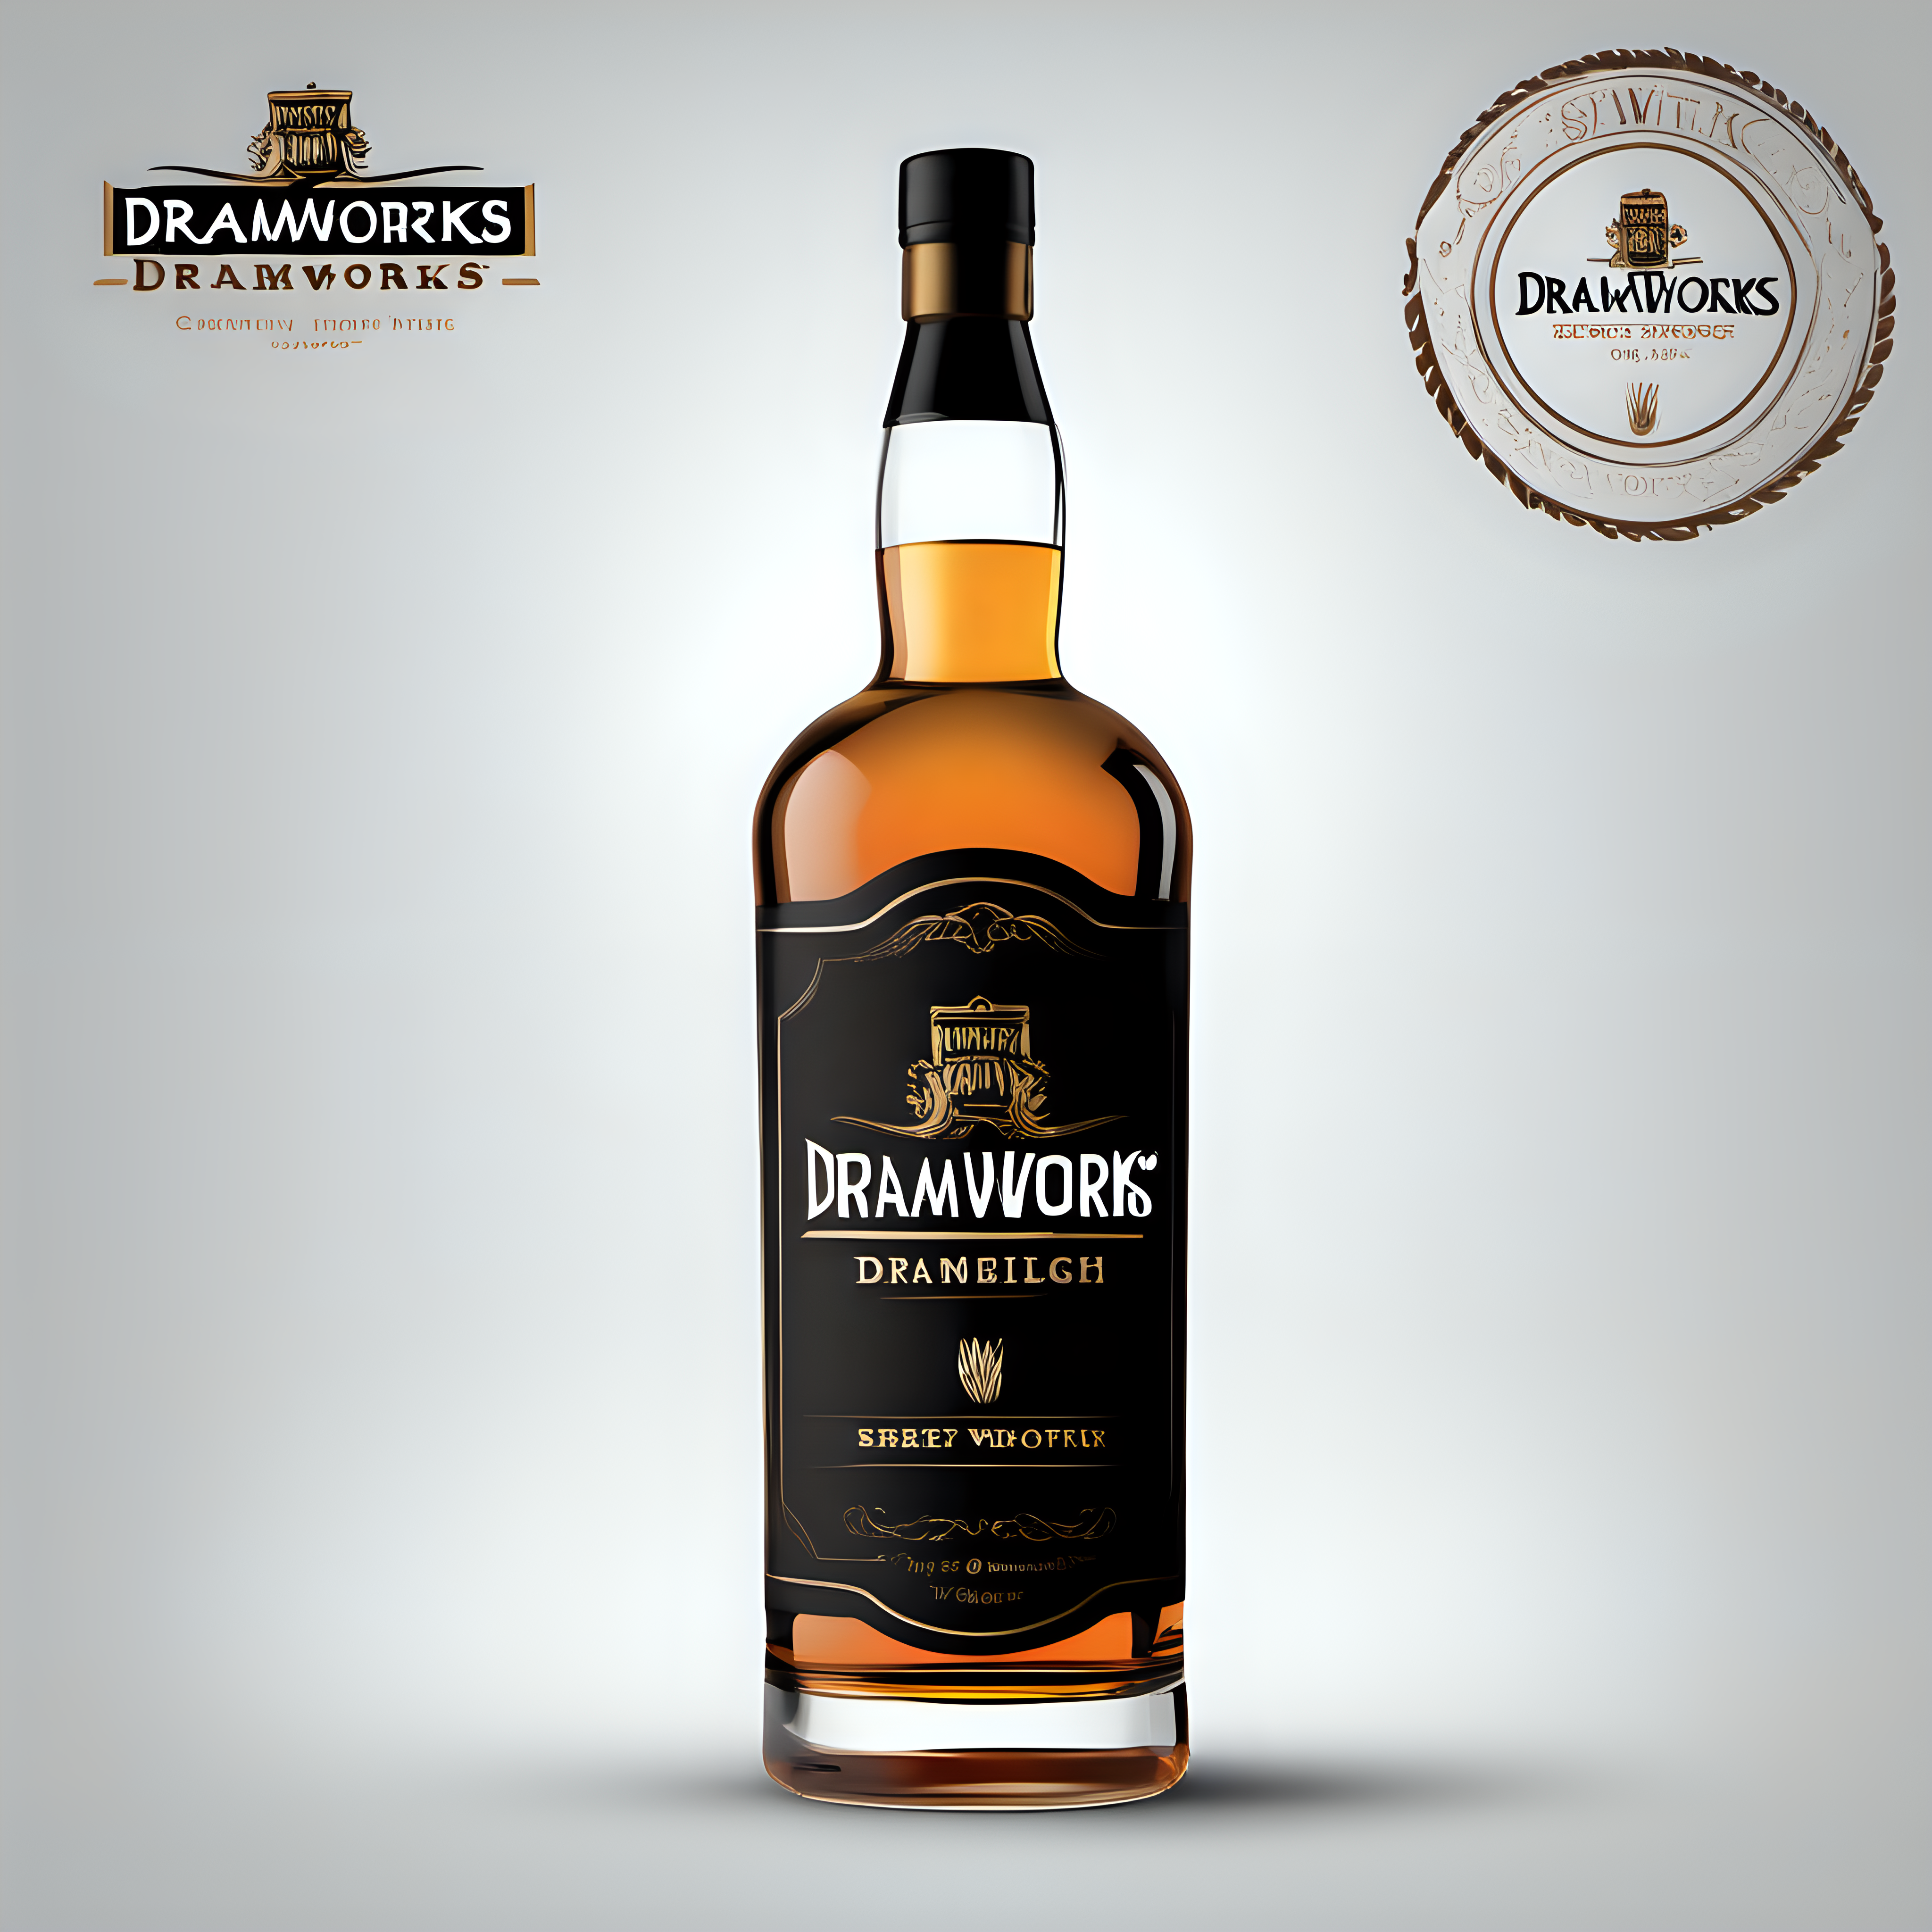 create a logo for Dramworks whisky brand using